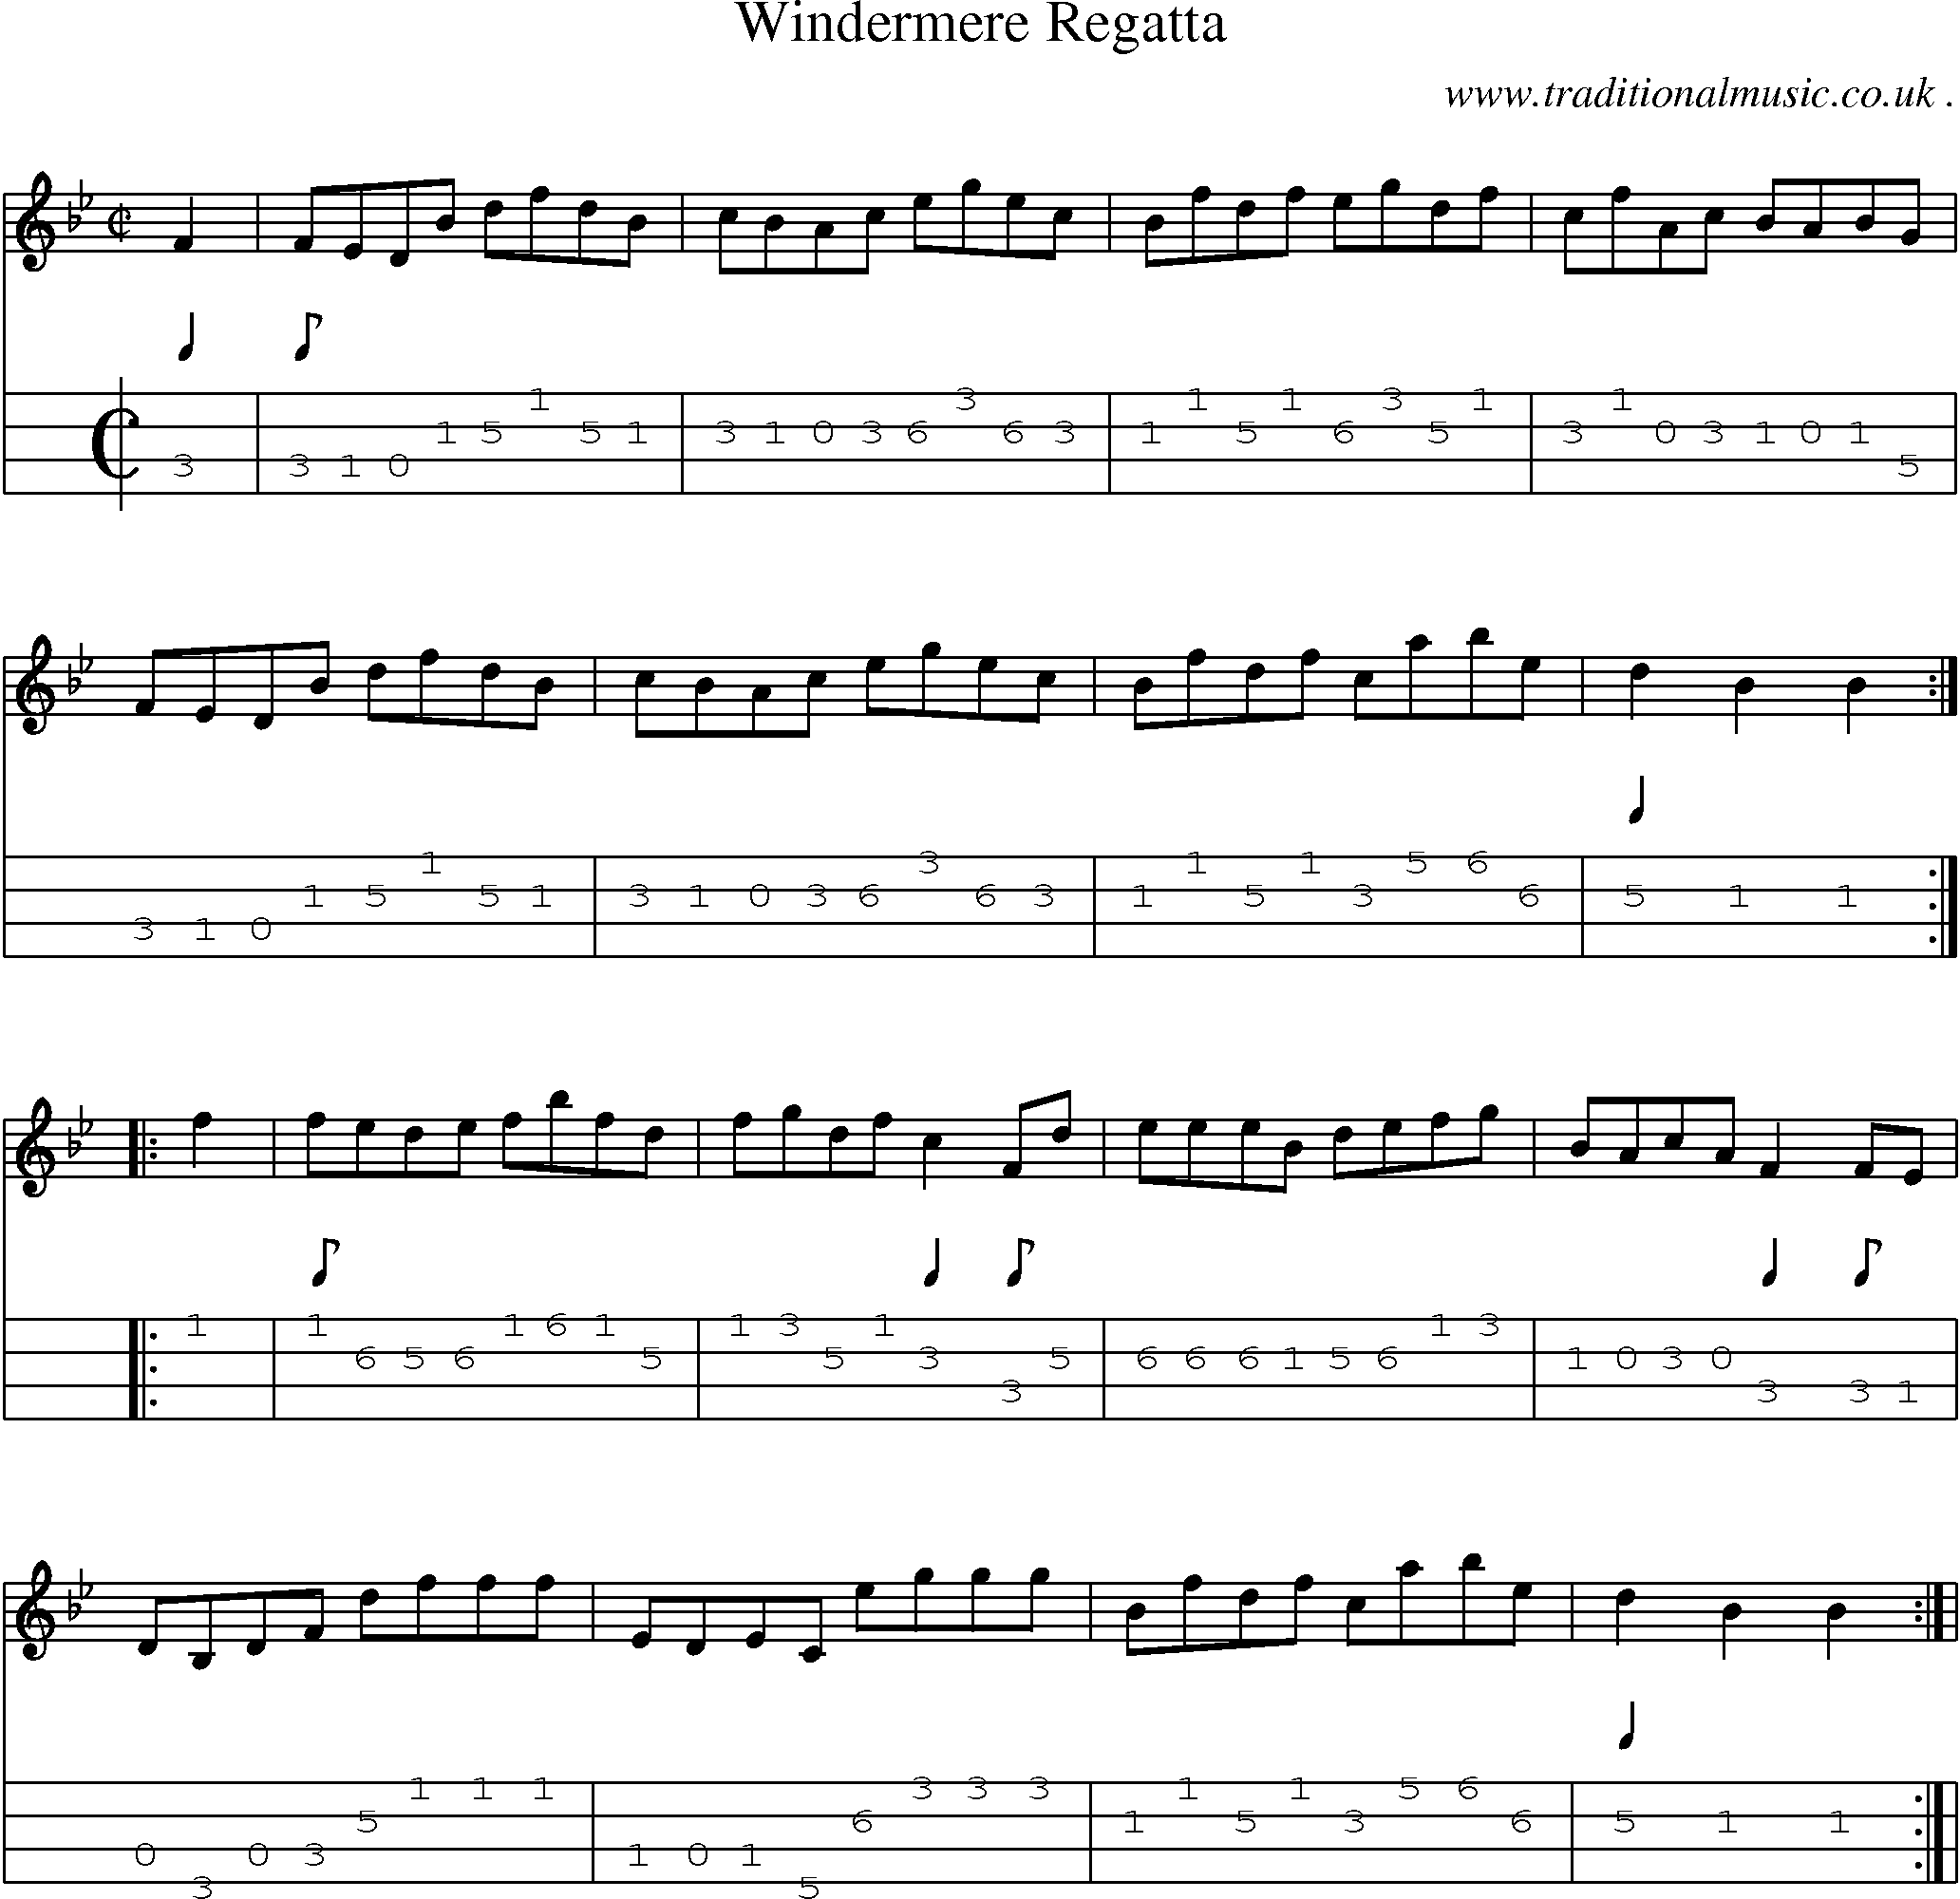 Sheet-Music and Mandolin Tabs for Windermere Regatta